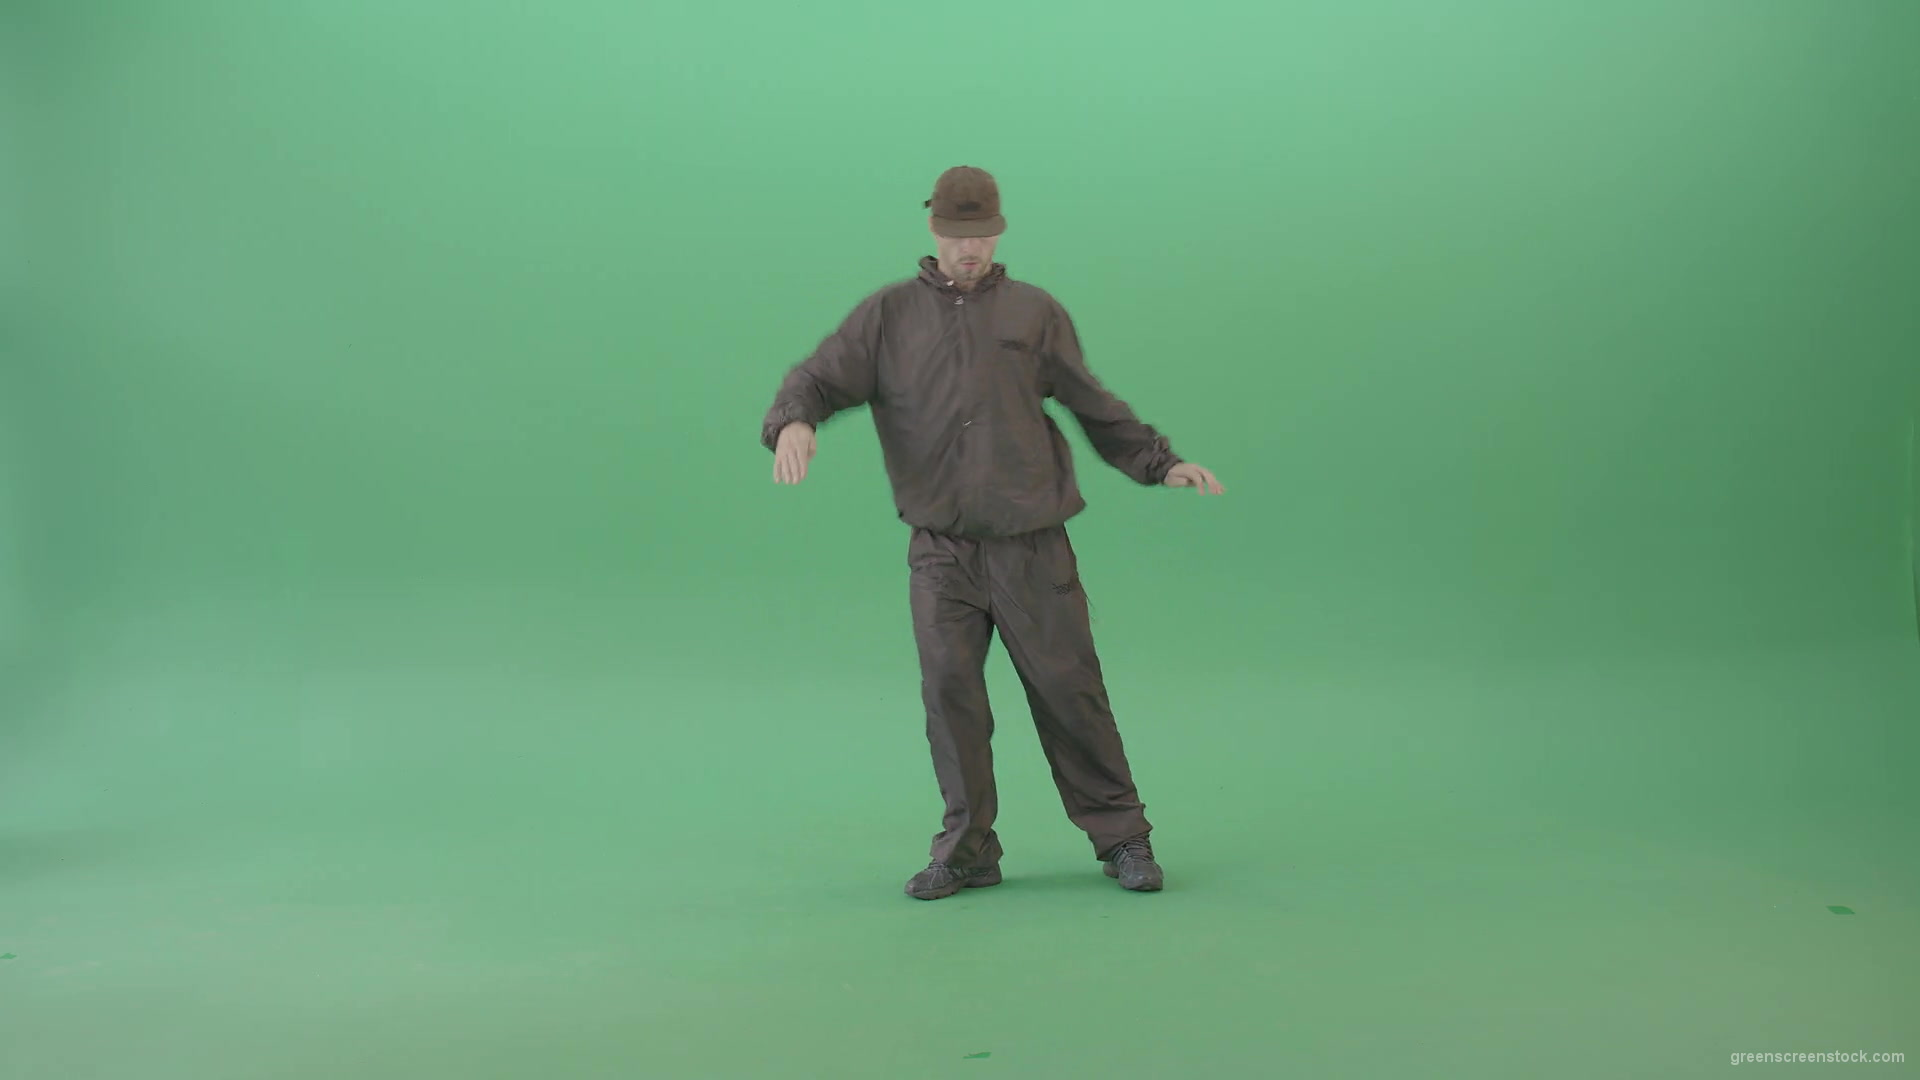 Professional-Hip-Hop-break-dancer-Stylish-young-man-dancing-against-green-screen-4K-Video-Footage-1920_009 Green Screen Stock